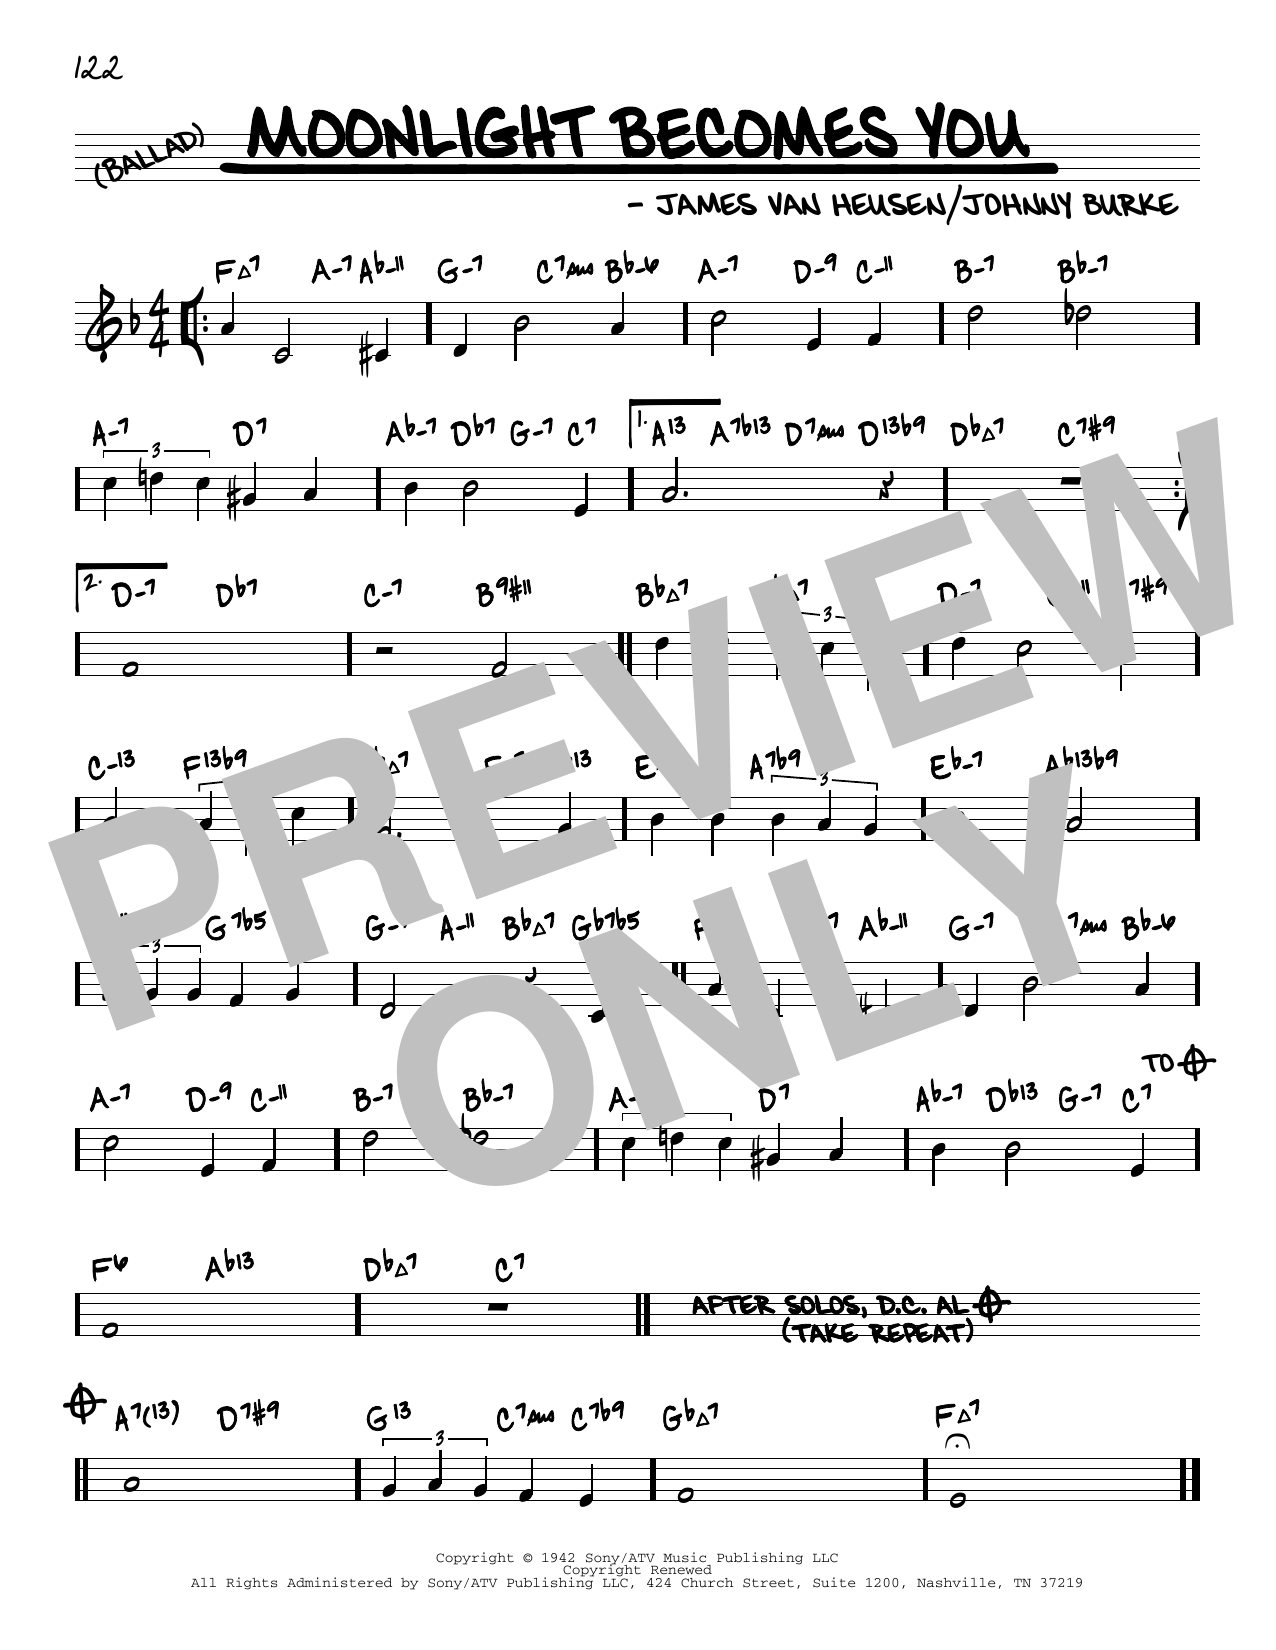 Jimmy Van Heusen Moonlight Becomes You (arr. David Hazeltine) Sheet Music Notes & Chords for Real Book – Enhanced Chords - Download or Print PDF